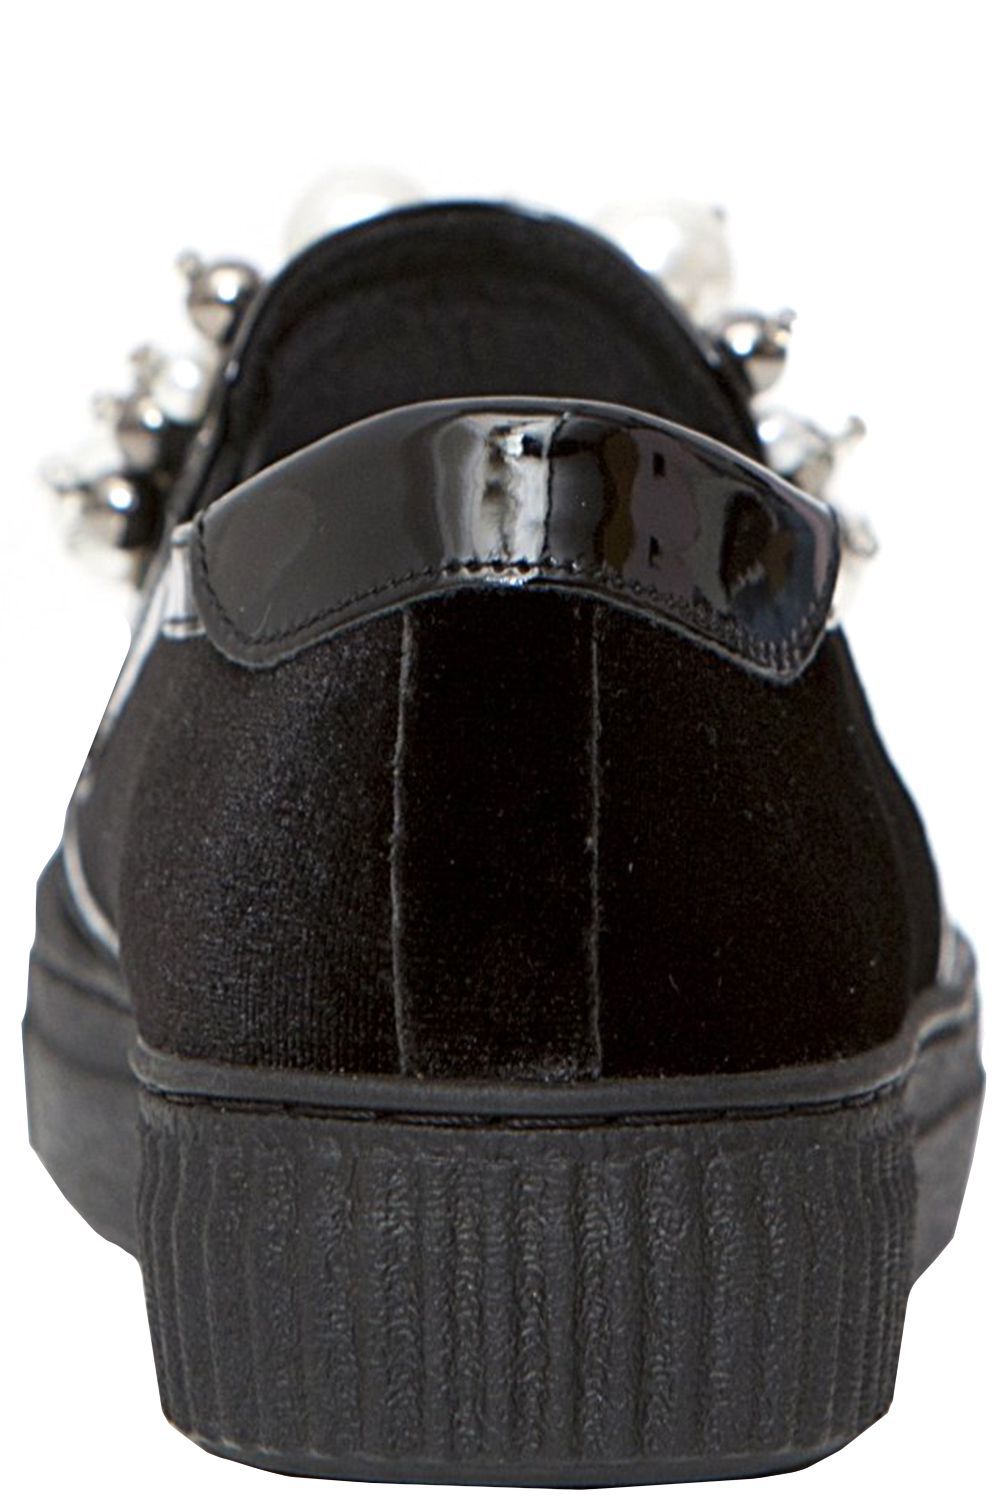 Ботинки Holala, размер 39, цвет черный HS0020T - фото 6